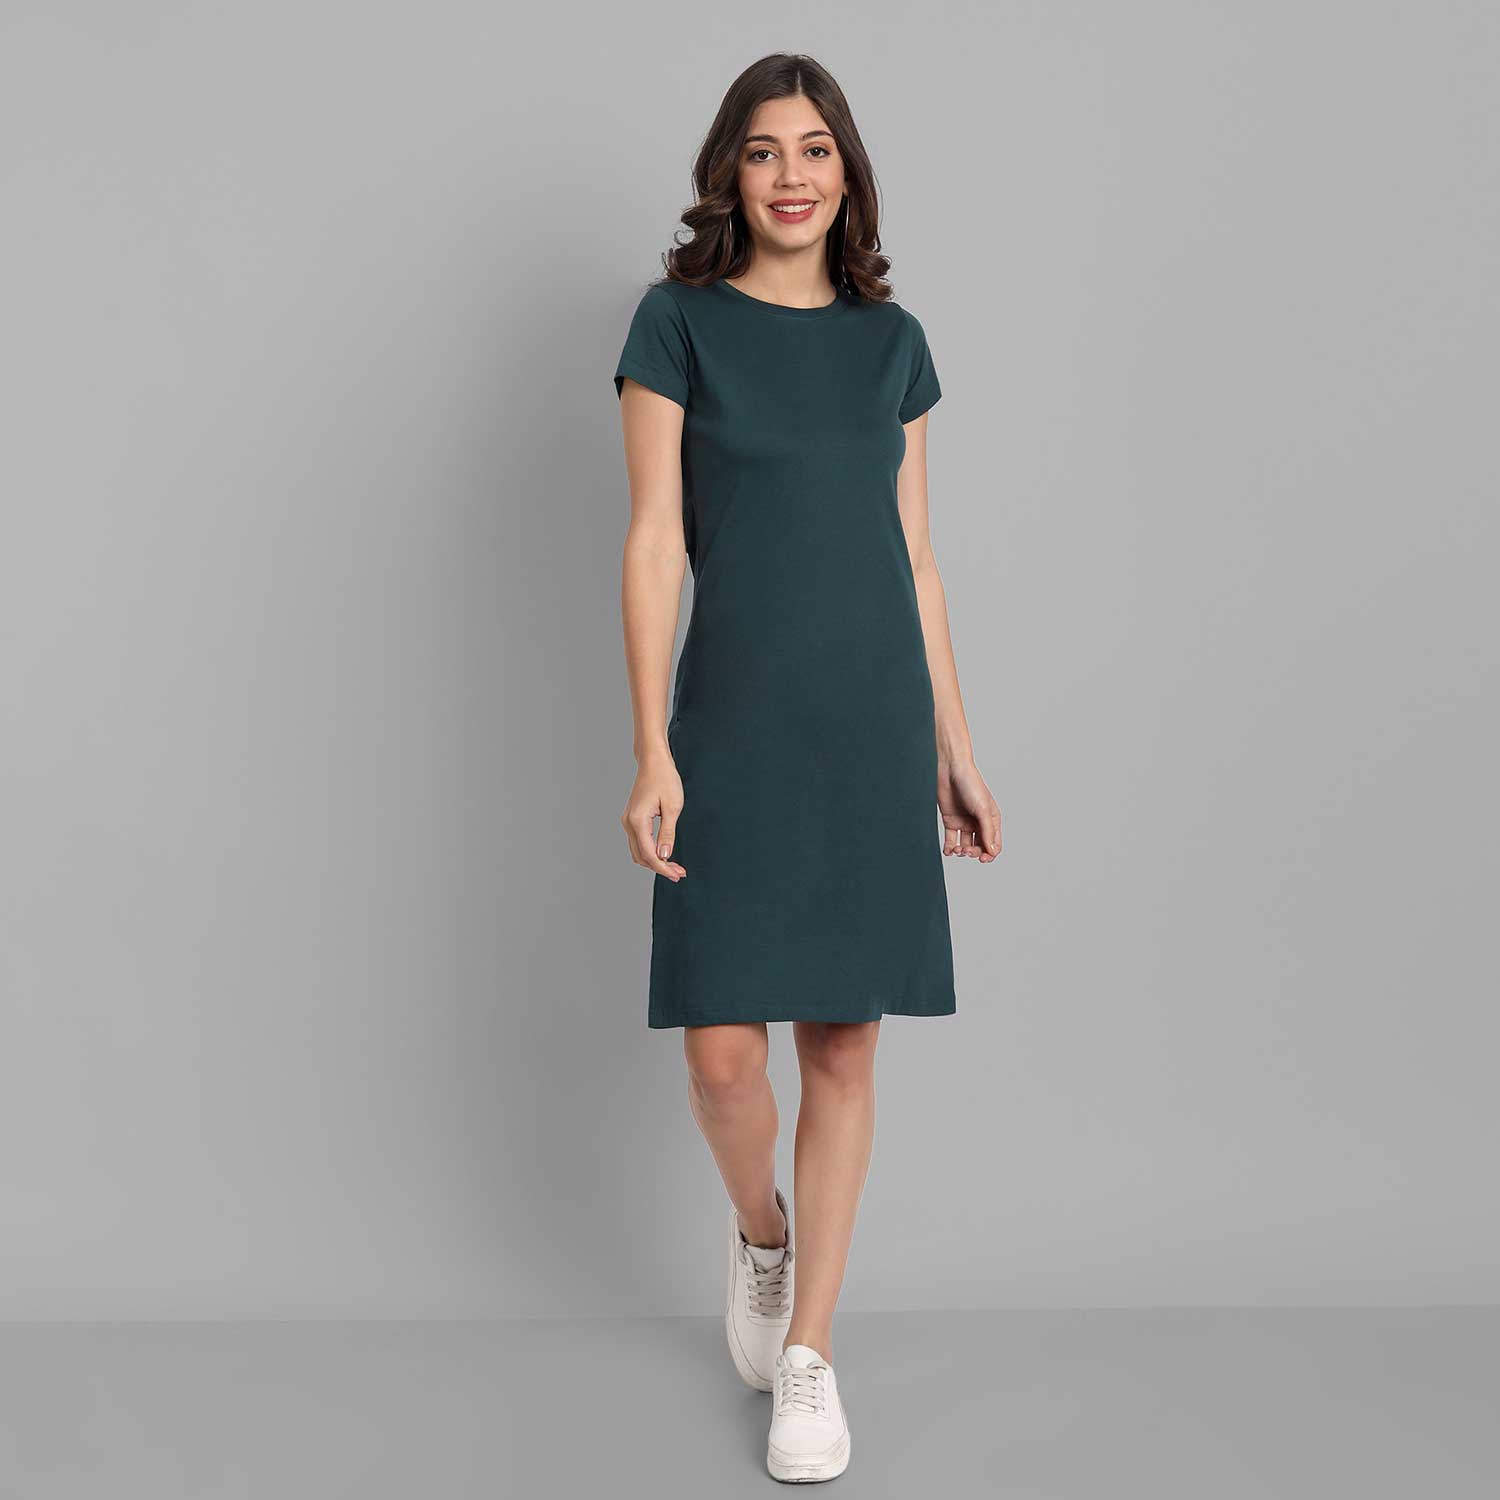 Green Plain Dresses For Woman